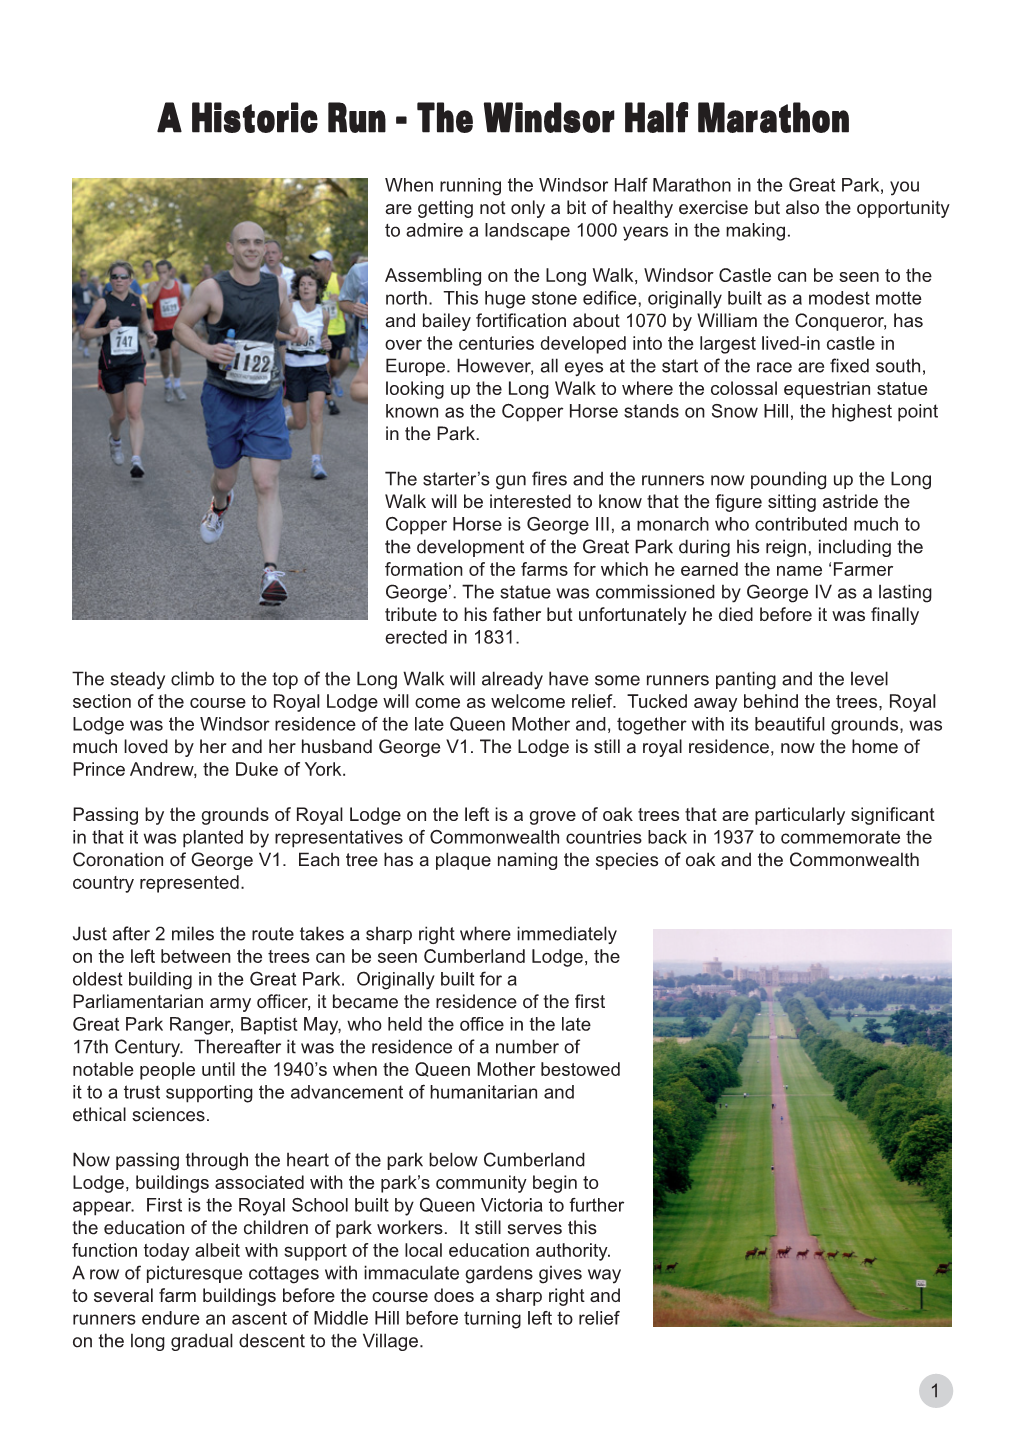 A Historic Run - the Windsor Half Marathon